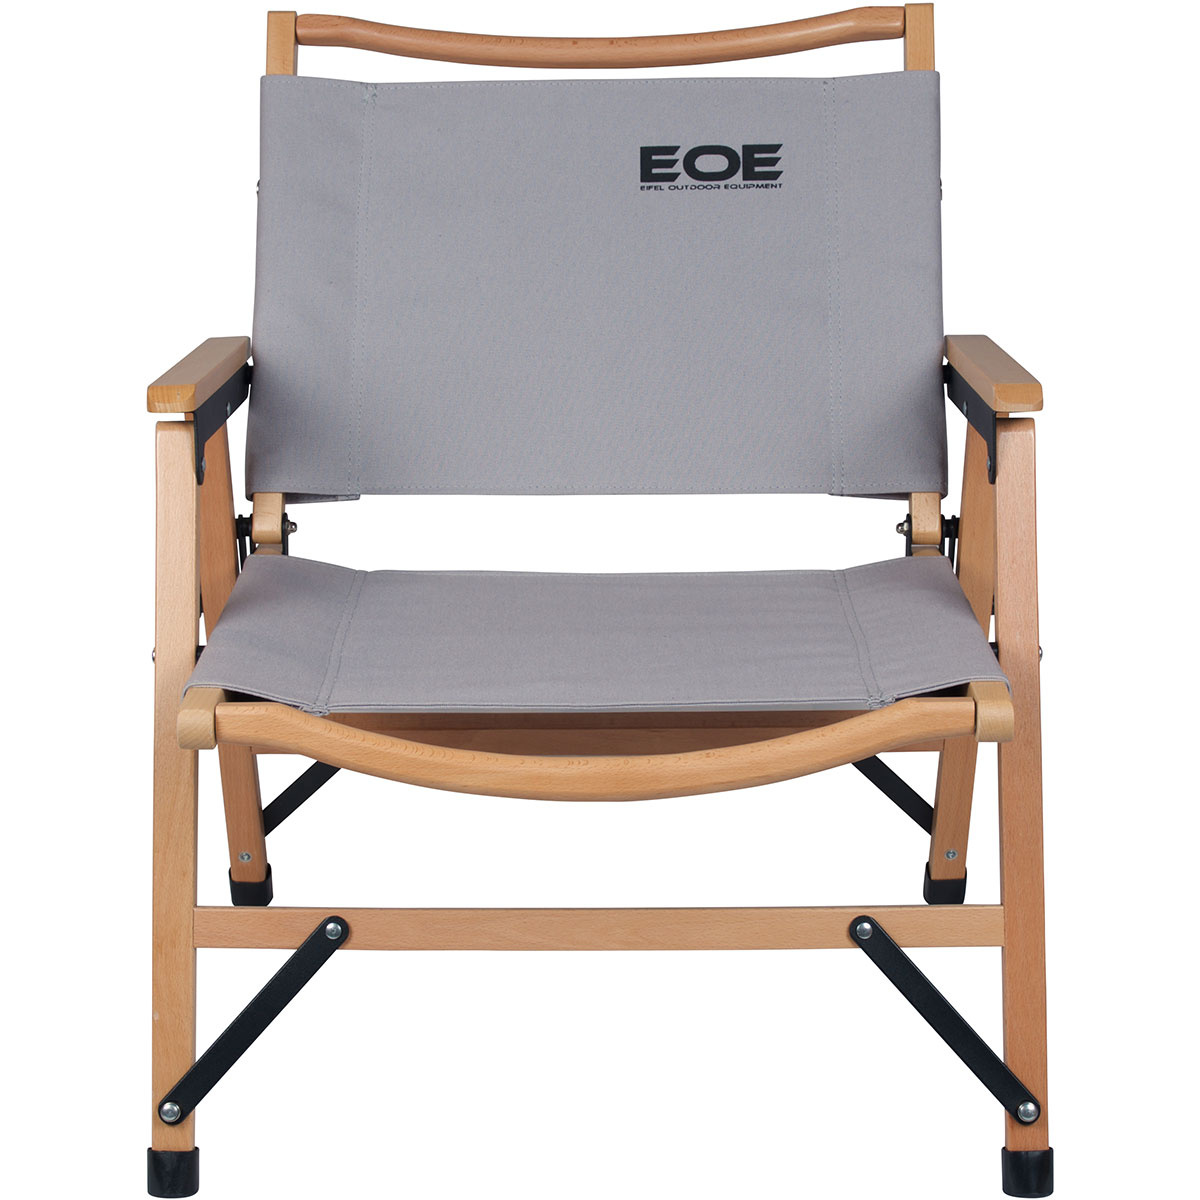 EOE – Eifel Outdoor Equipment Klappstuhl (Größe One Size, dove grey)